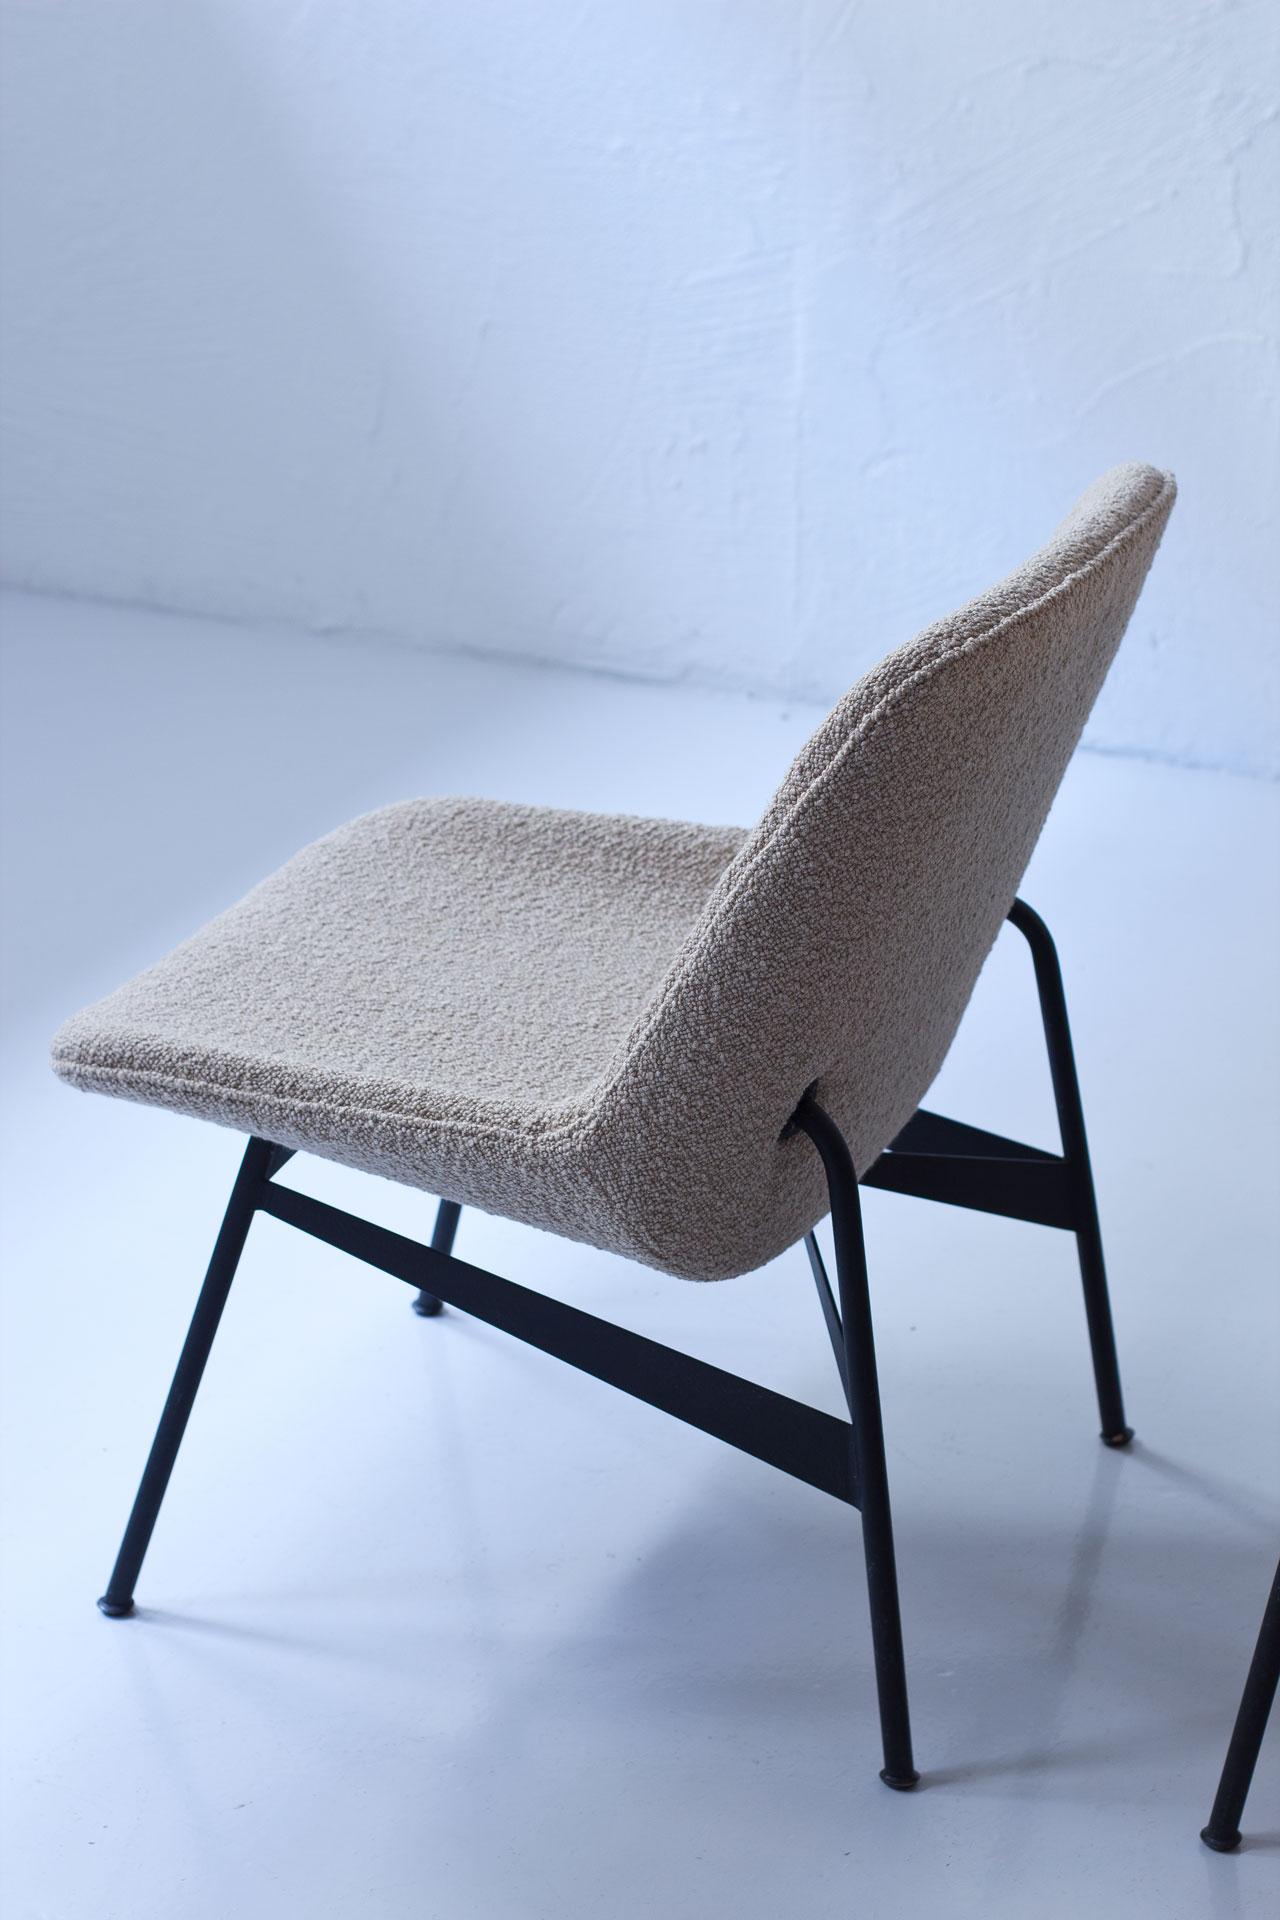 Steel Rare Swedish Modern Lounge Chairs by Hans-Harald Molander for Nordiska Kompaniet